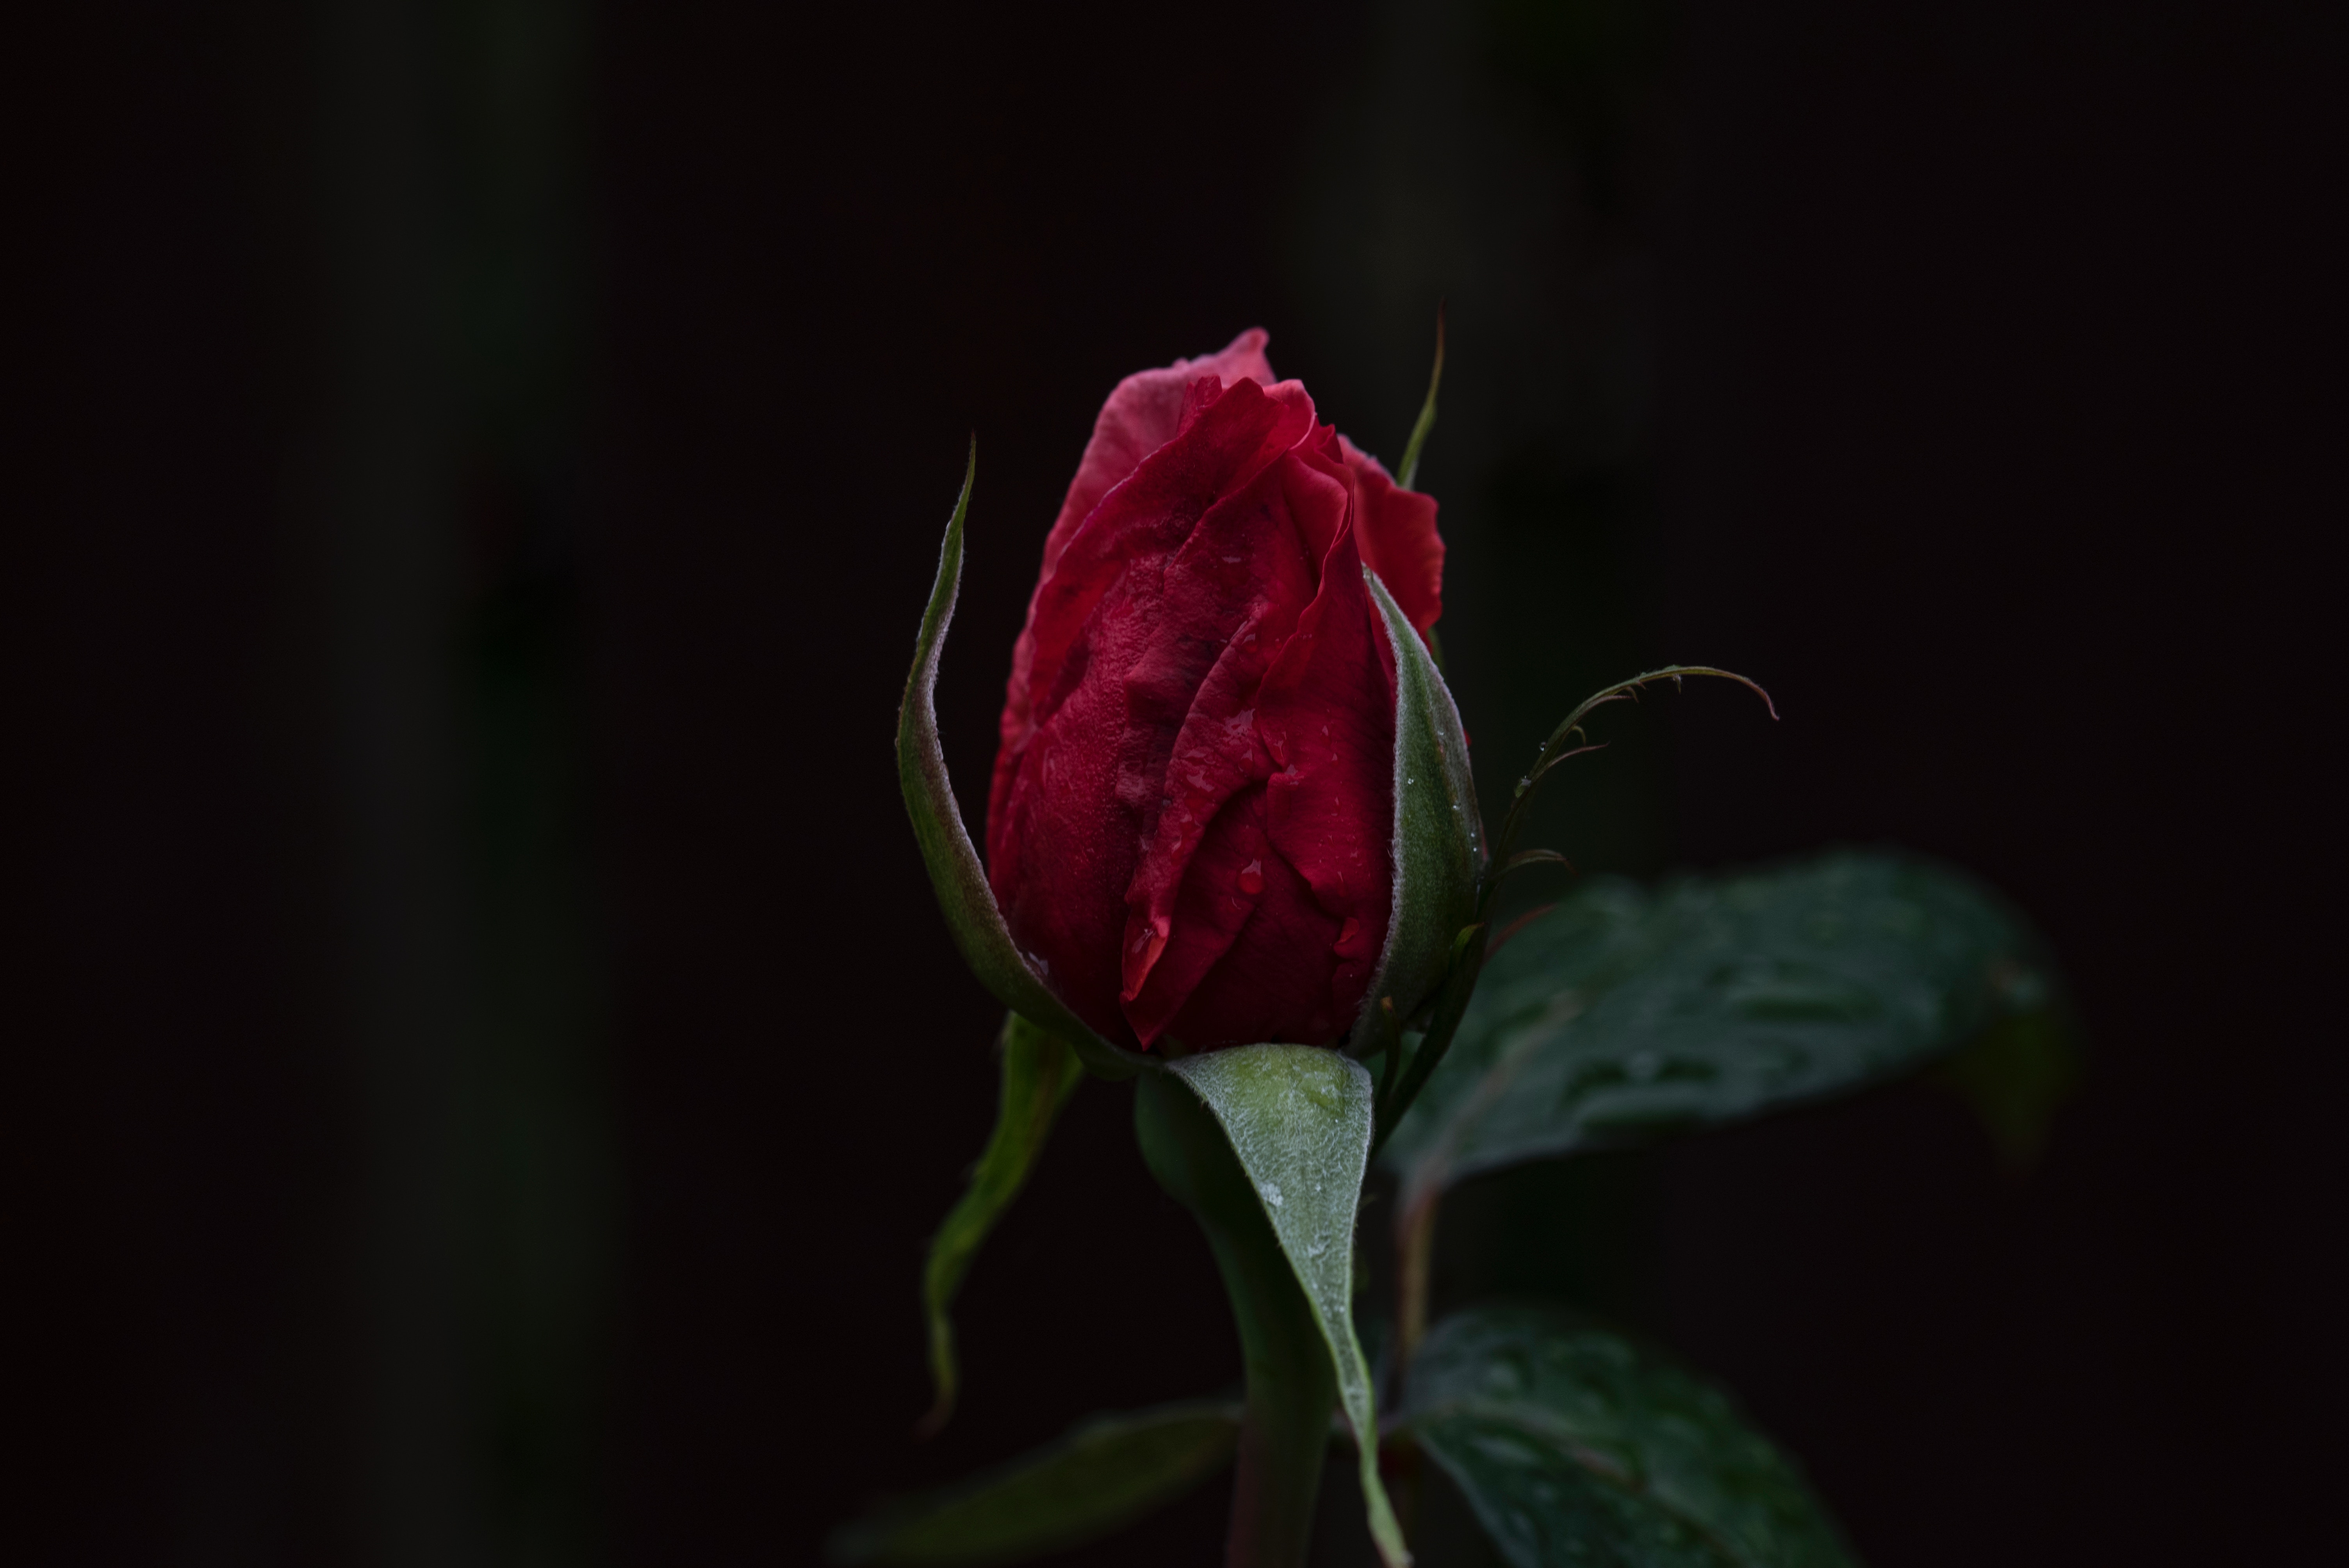 dark background, stalk, rose flower, stem home screen for smartphone